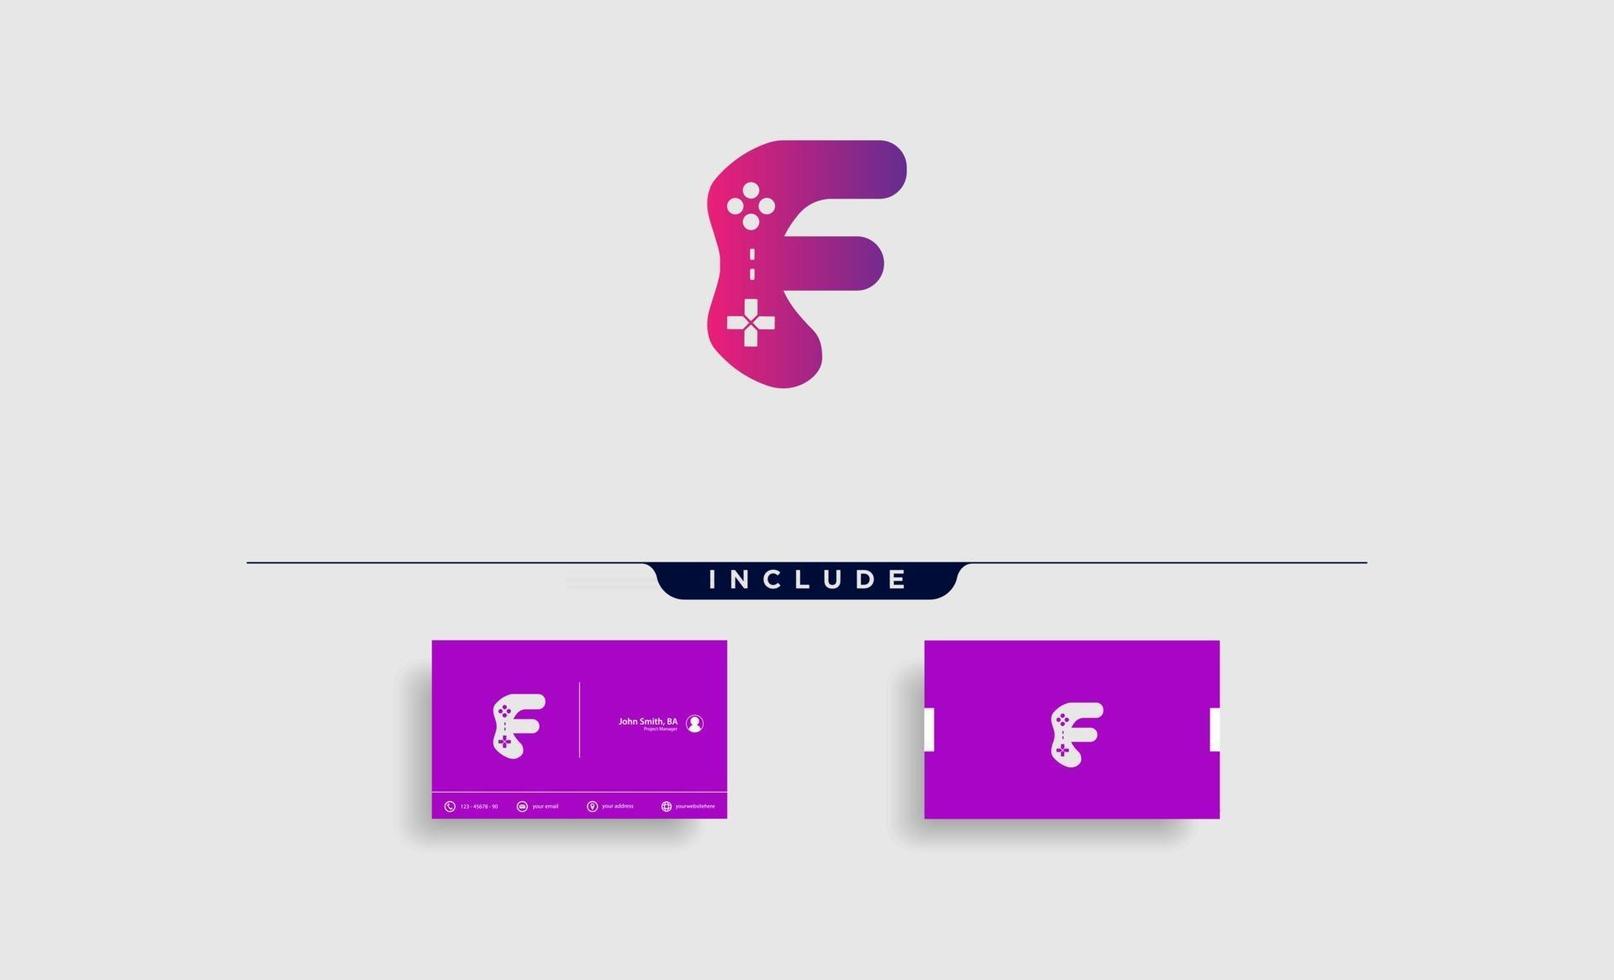 Buchstabe f Spiel Logo Design Vorlage Vektor Illustration Gamepad Symbol Element Vektor